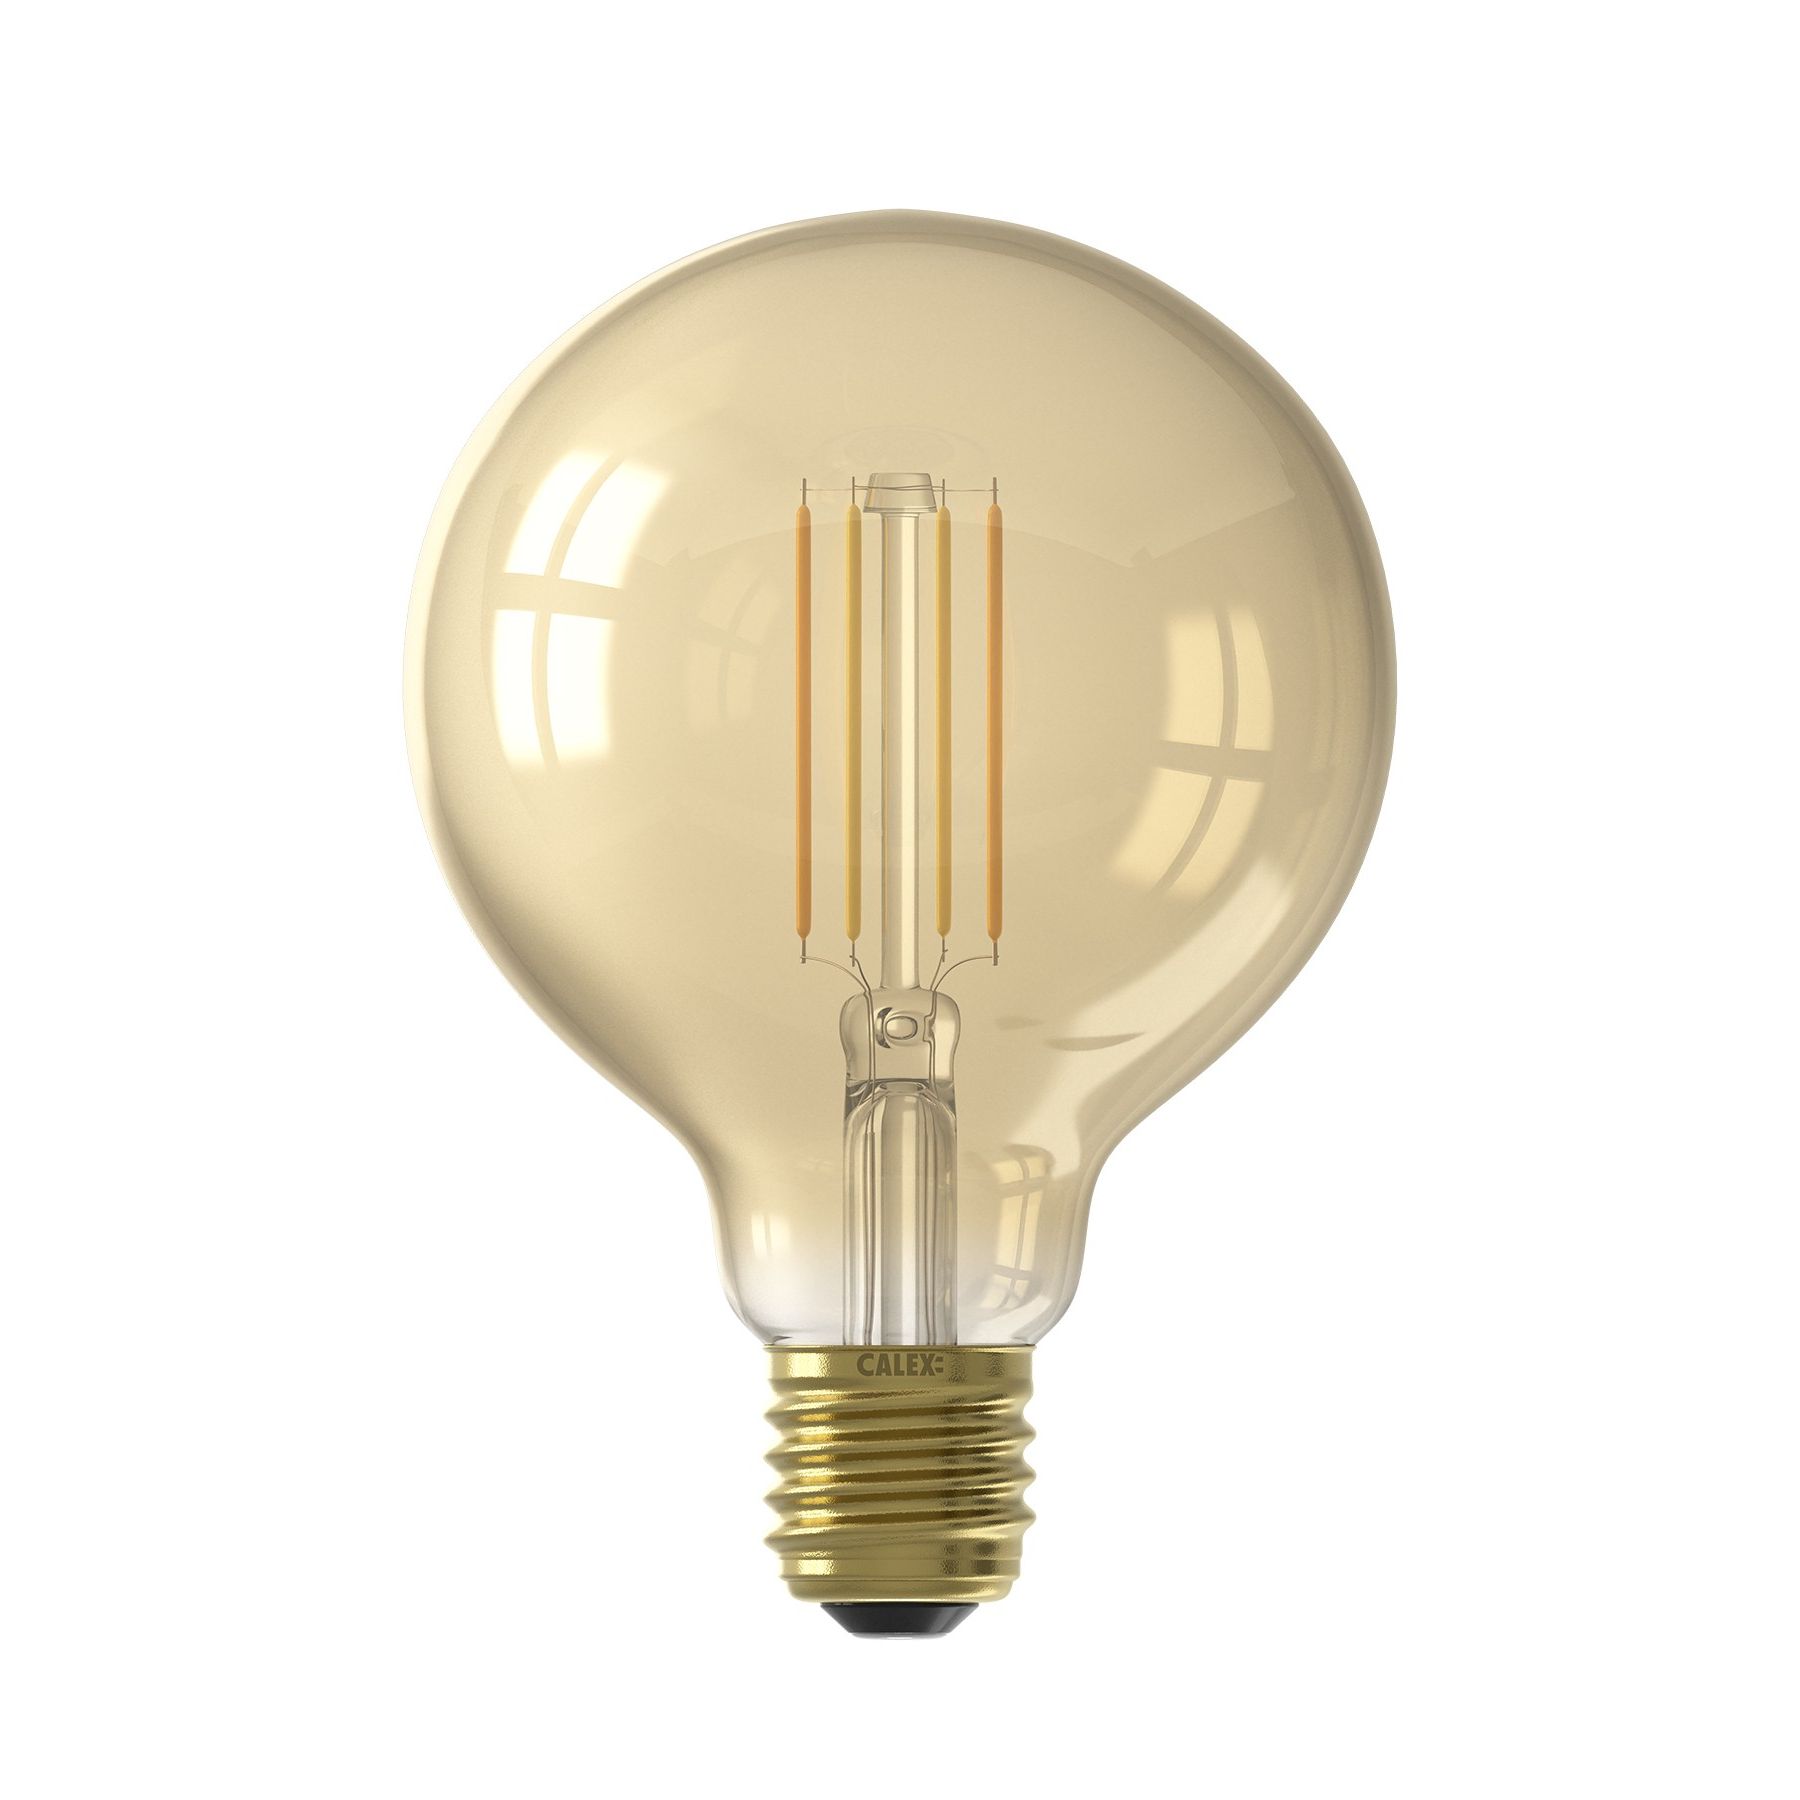 silhouet Zenuwinzinking G Calex Smart LED lamp - Ø 9,5 x 14 cm - E27 - 7W - dimfunctie via app - 1800  tot 3000K - white ambiance | Lichtkoning